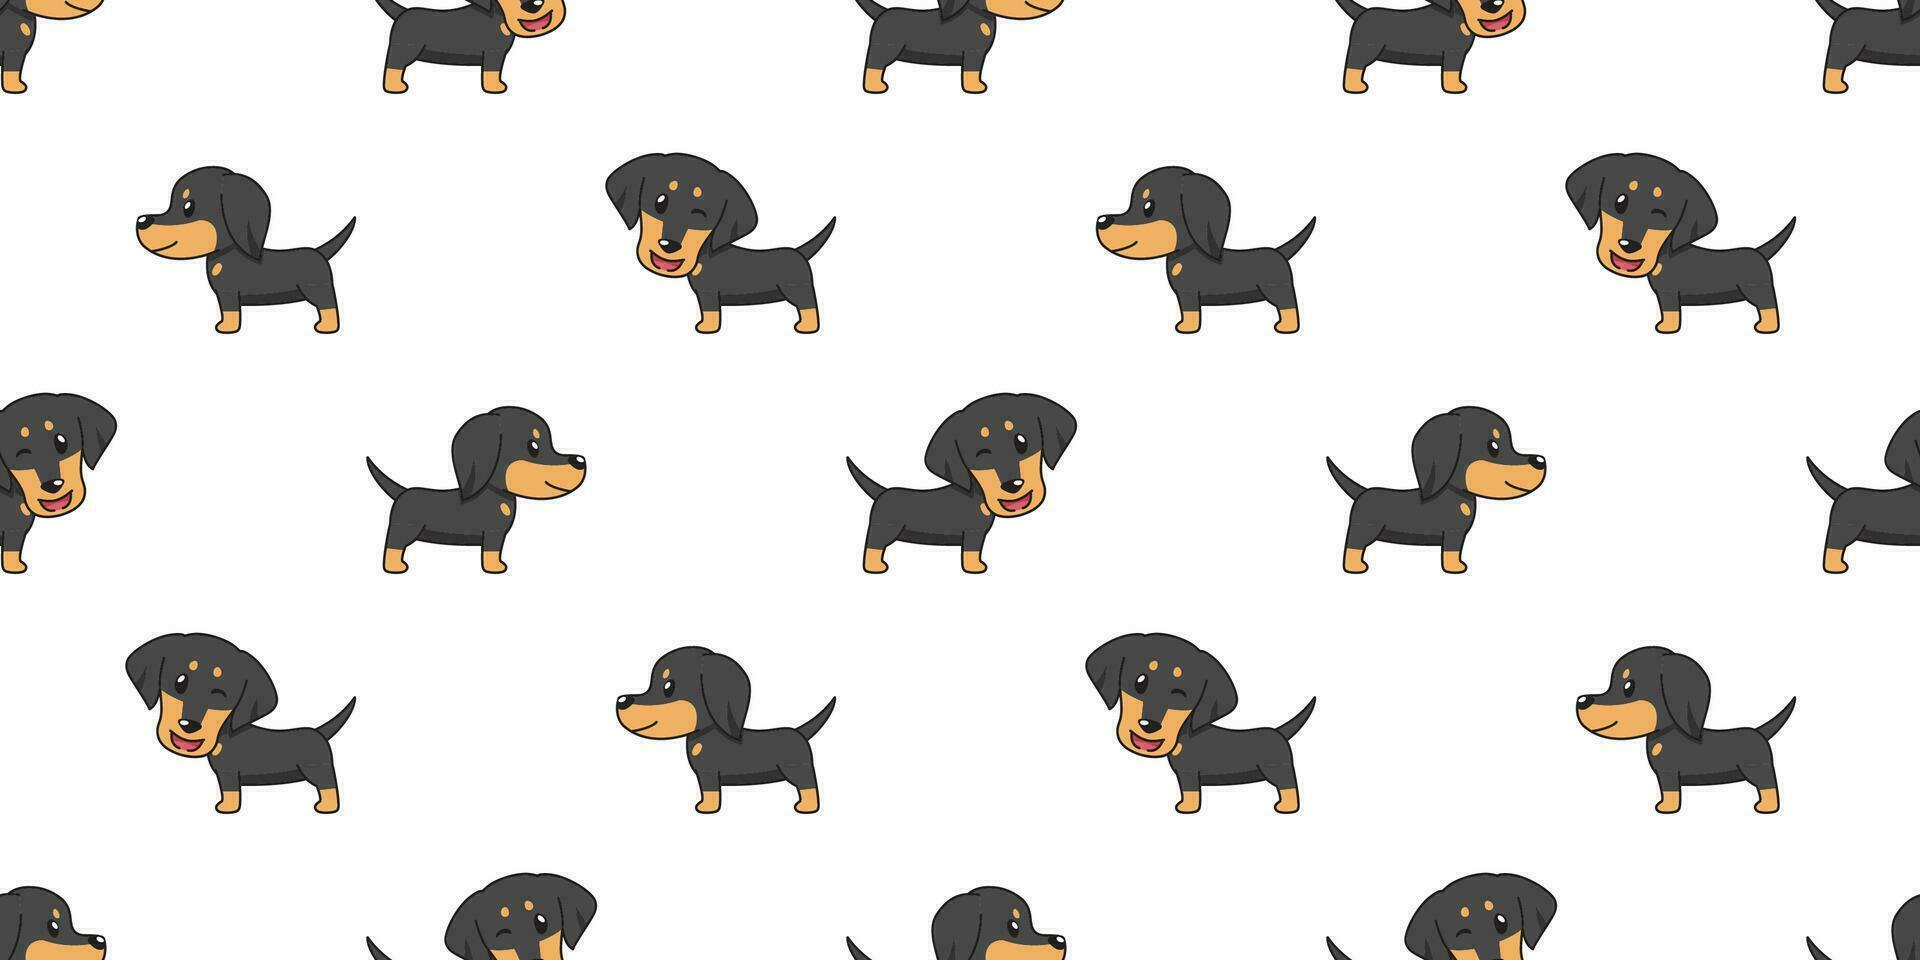 vektor tecknad serie tax hund sömlös mönster bakgrund